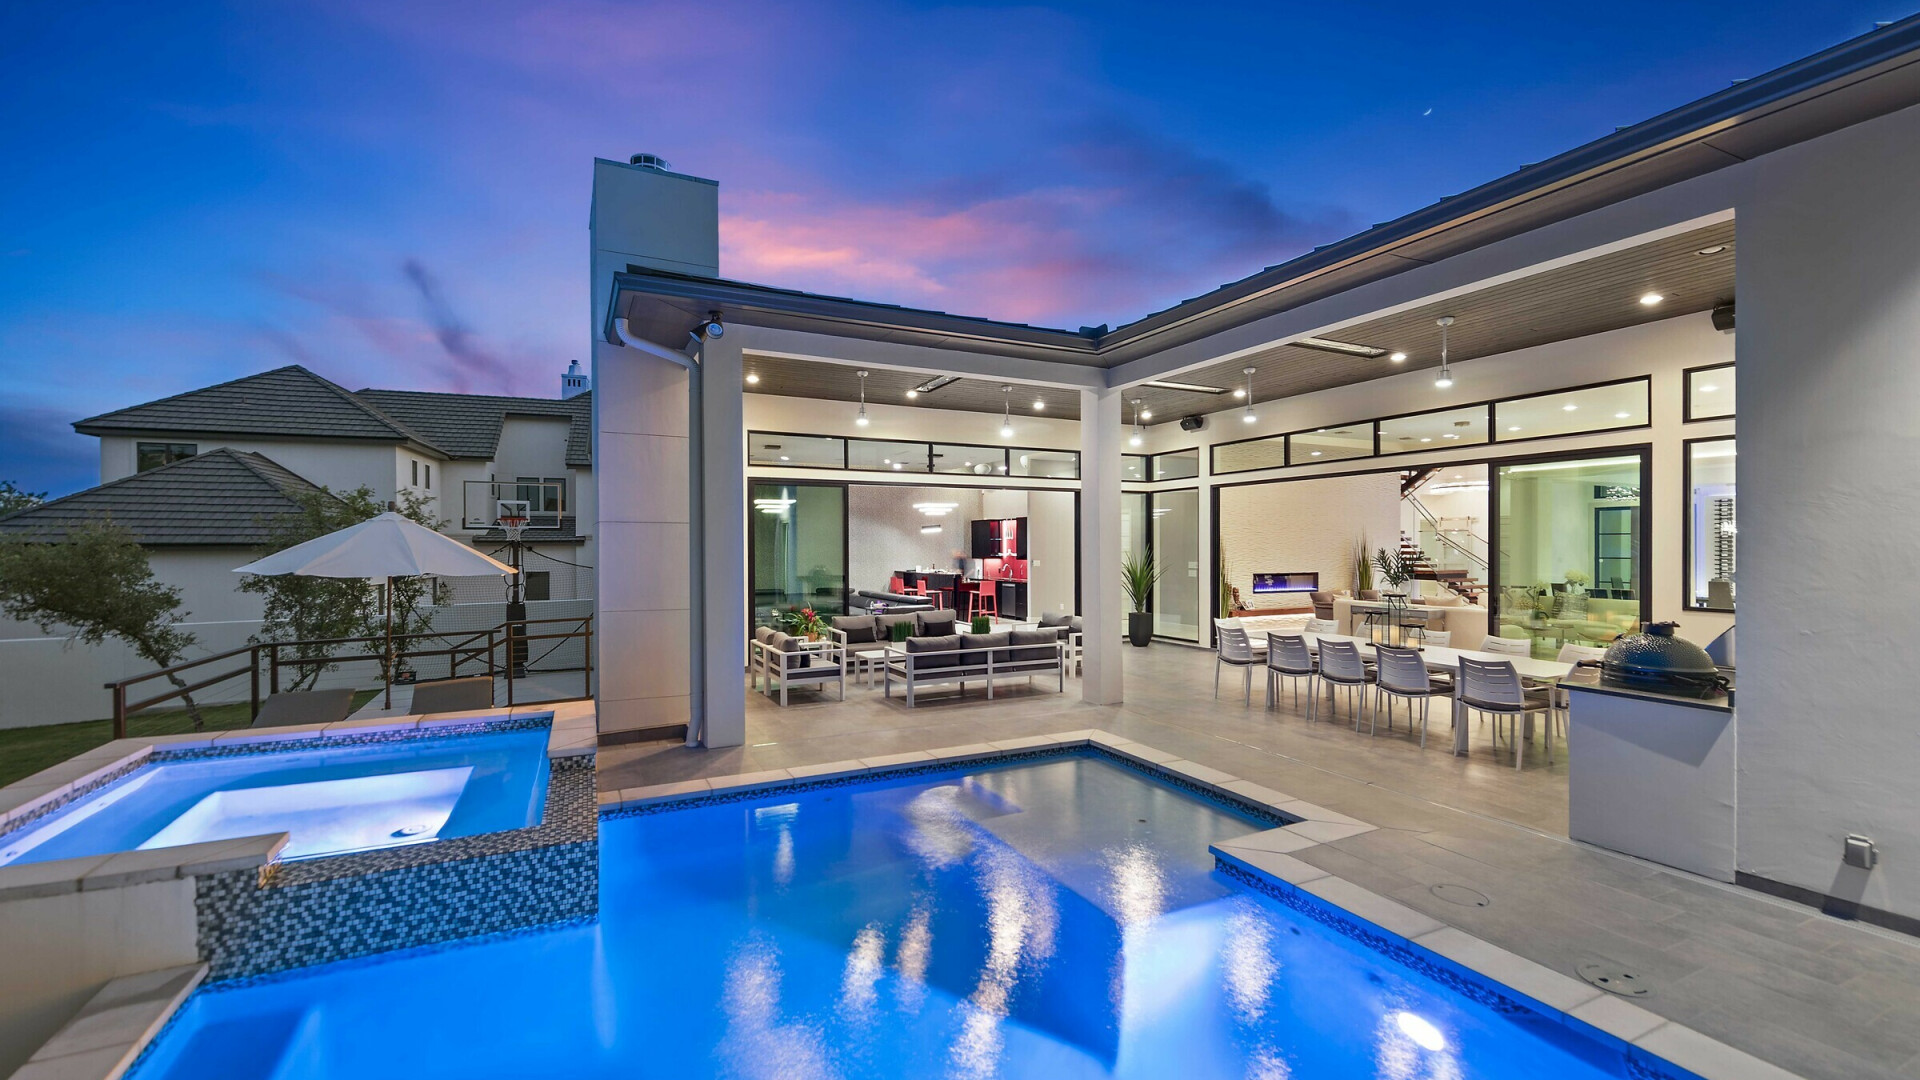 Exterior of luxury custom home boasting indoor-outdoor living elements, San Antonio TX